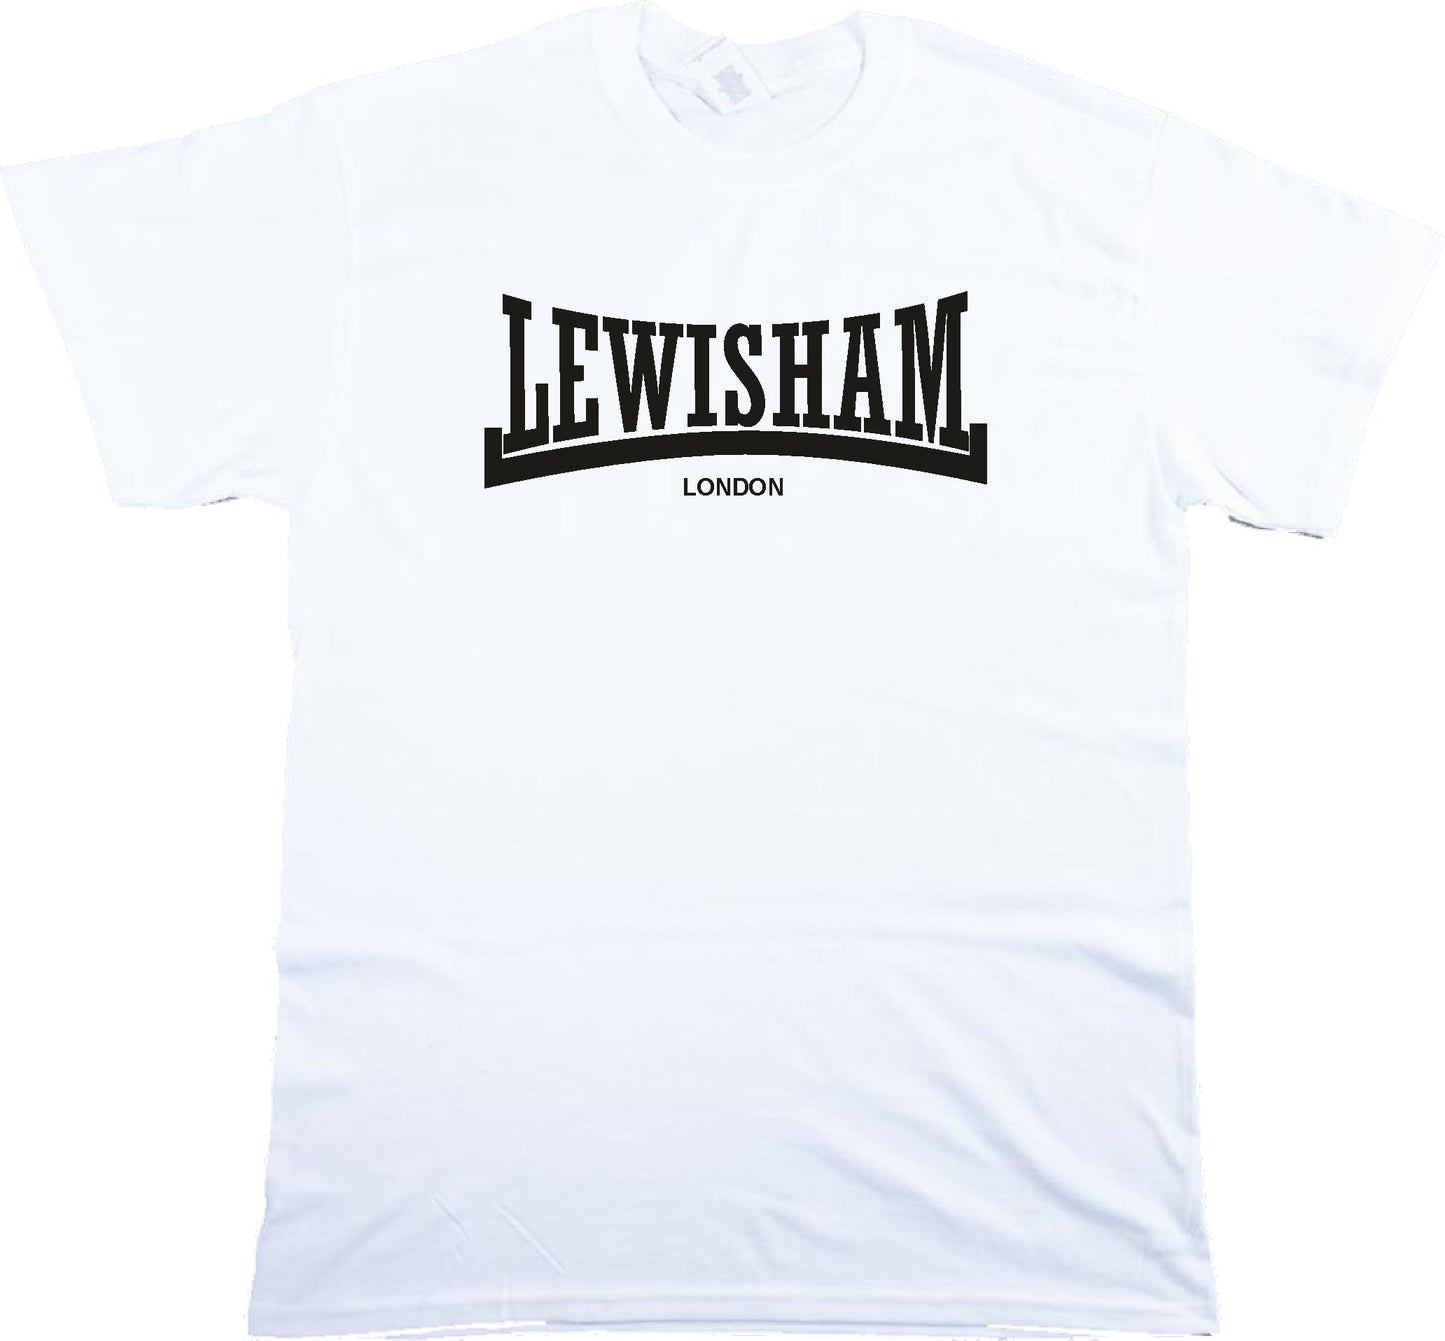 Lewisham T-Shirt - London Souvenir, Personalised Custom Print Available, Various Colours